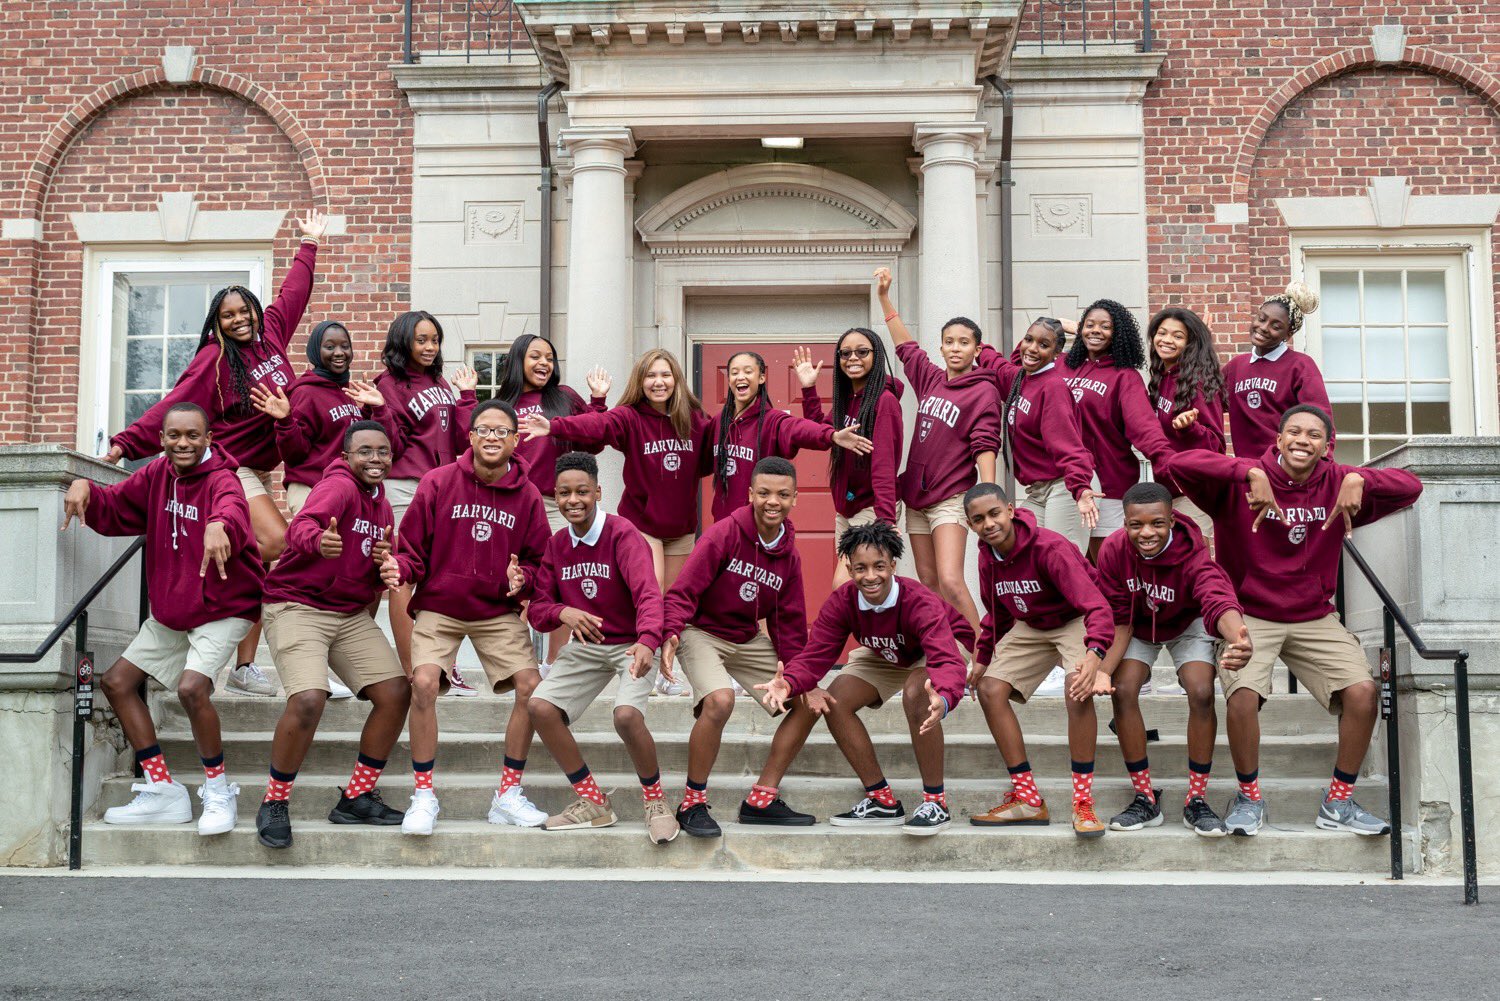 South Fulton Students ‘Bring the Culture’ in History-Making Debate Win at Harvard